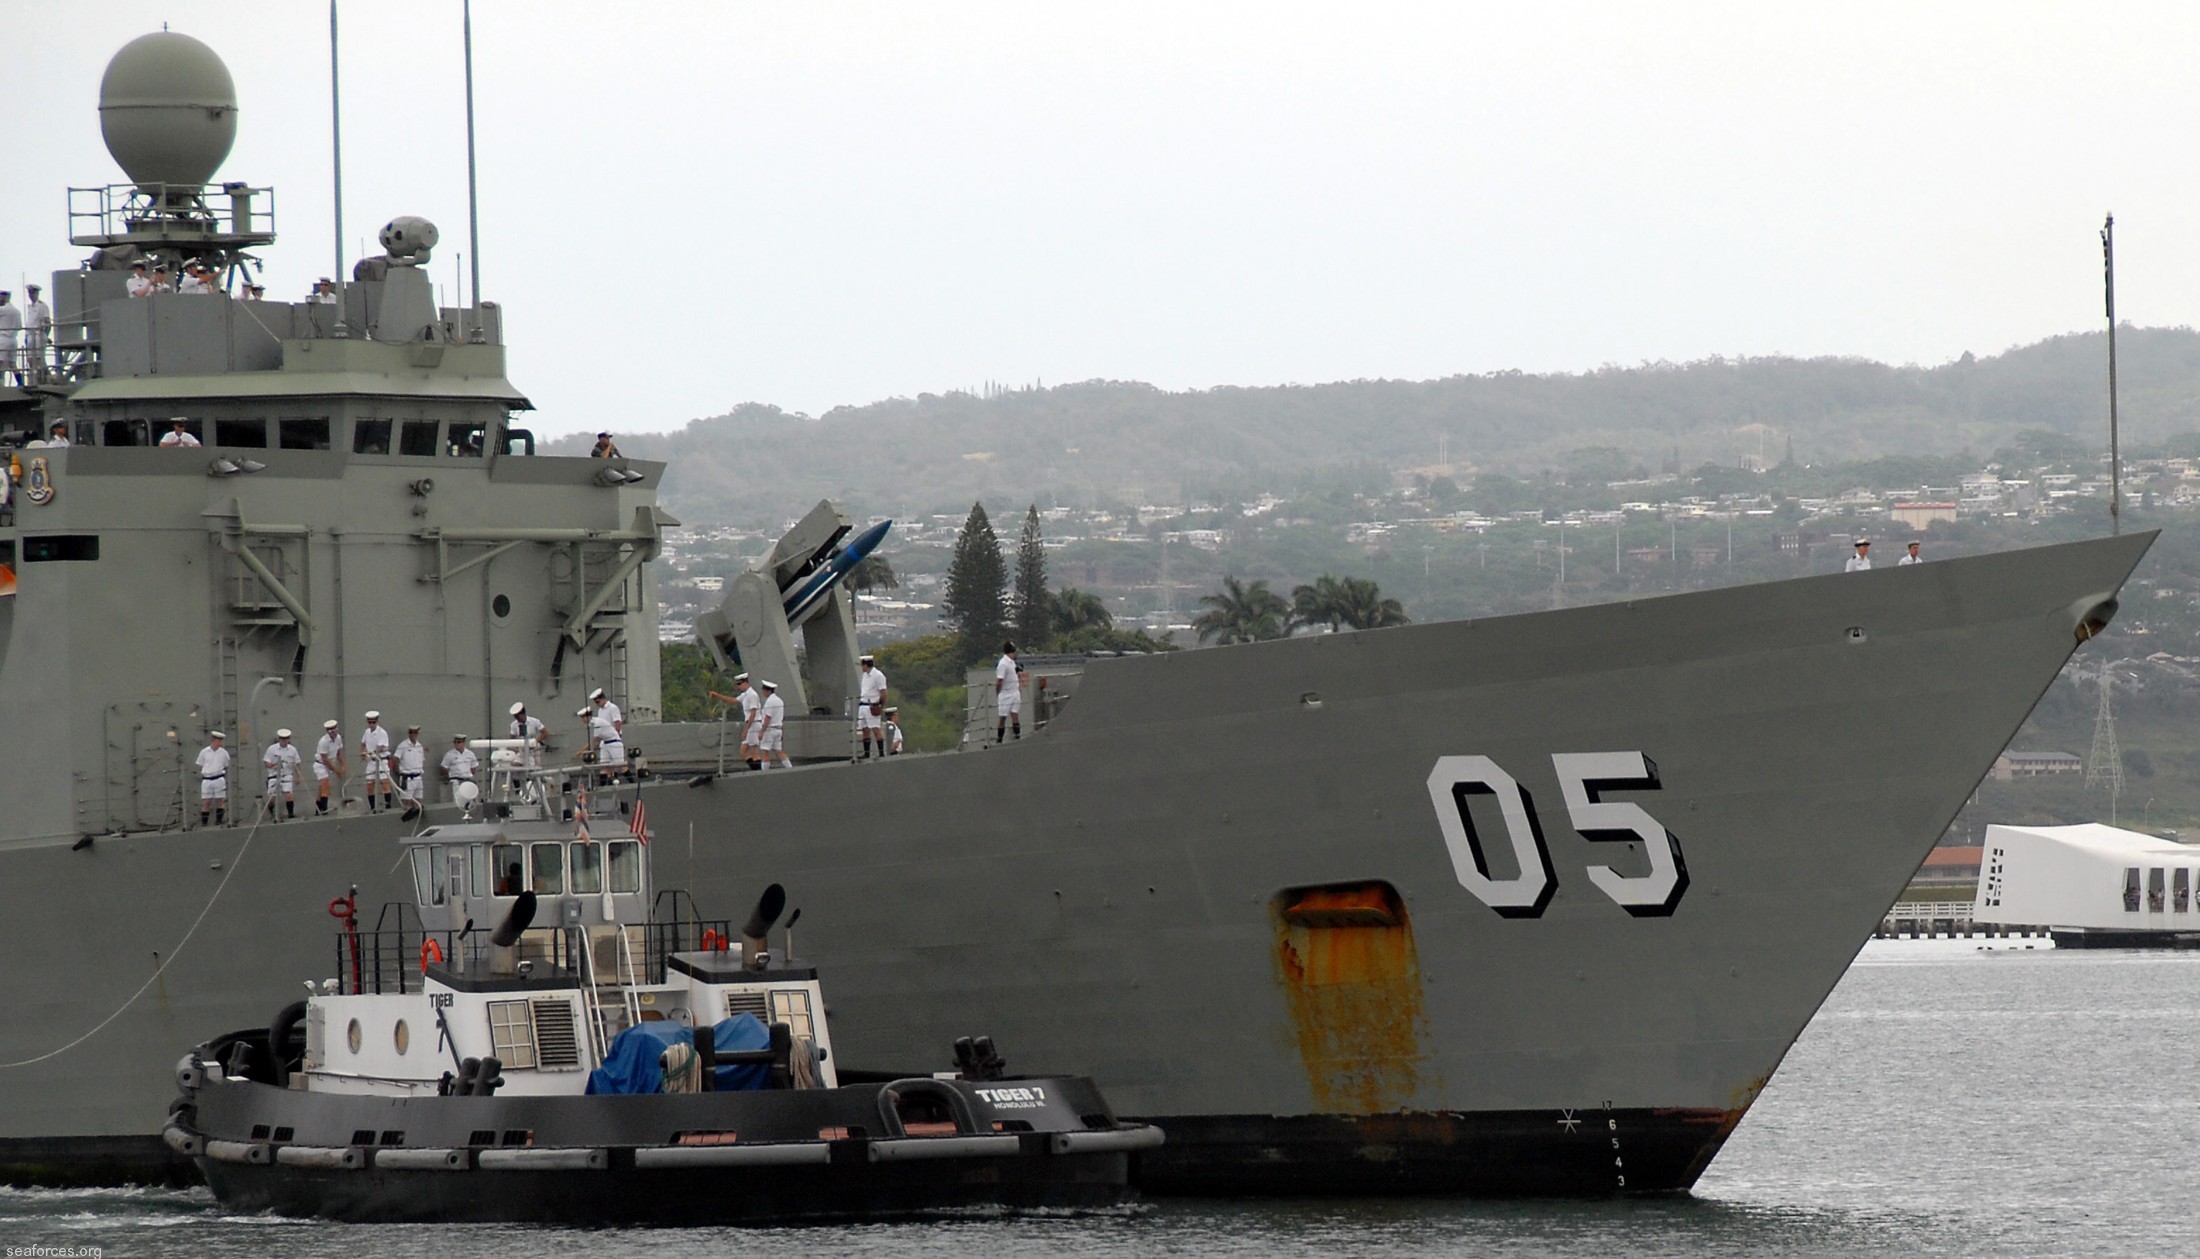 ffg-05 hmas melbourne adelaide class frigate royal australian navy 2009 04 pearl harbor